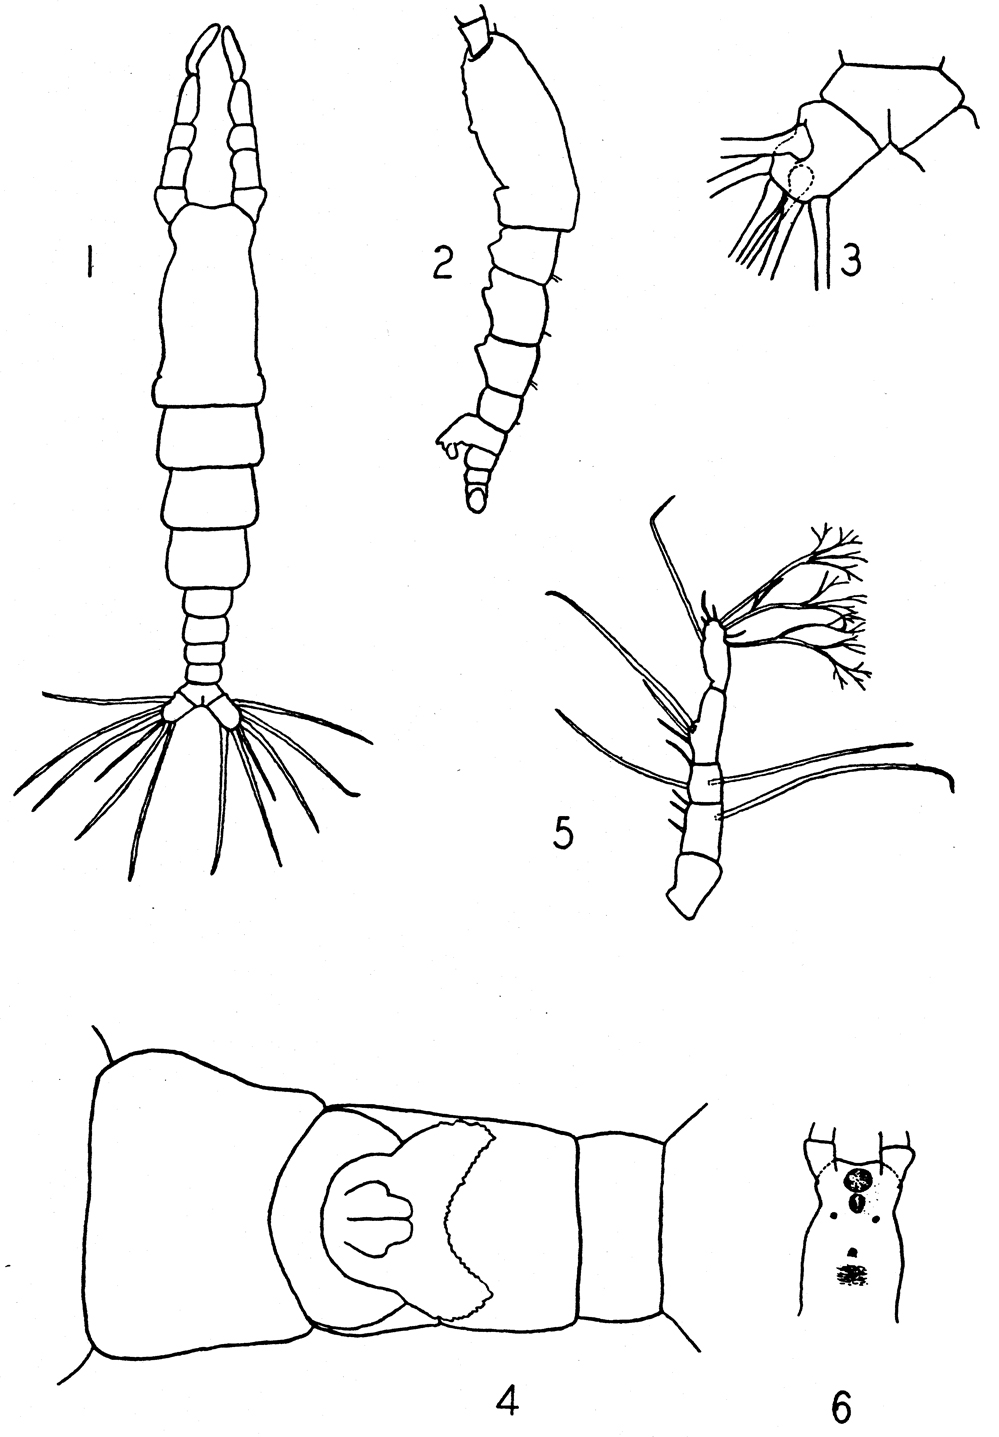 Species Monstrilla rugosa - Plate 1 of morphological figures